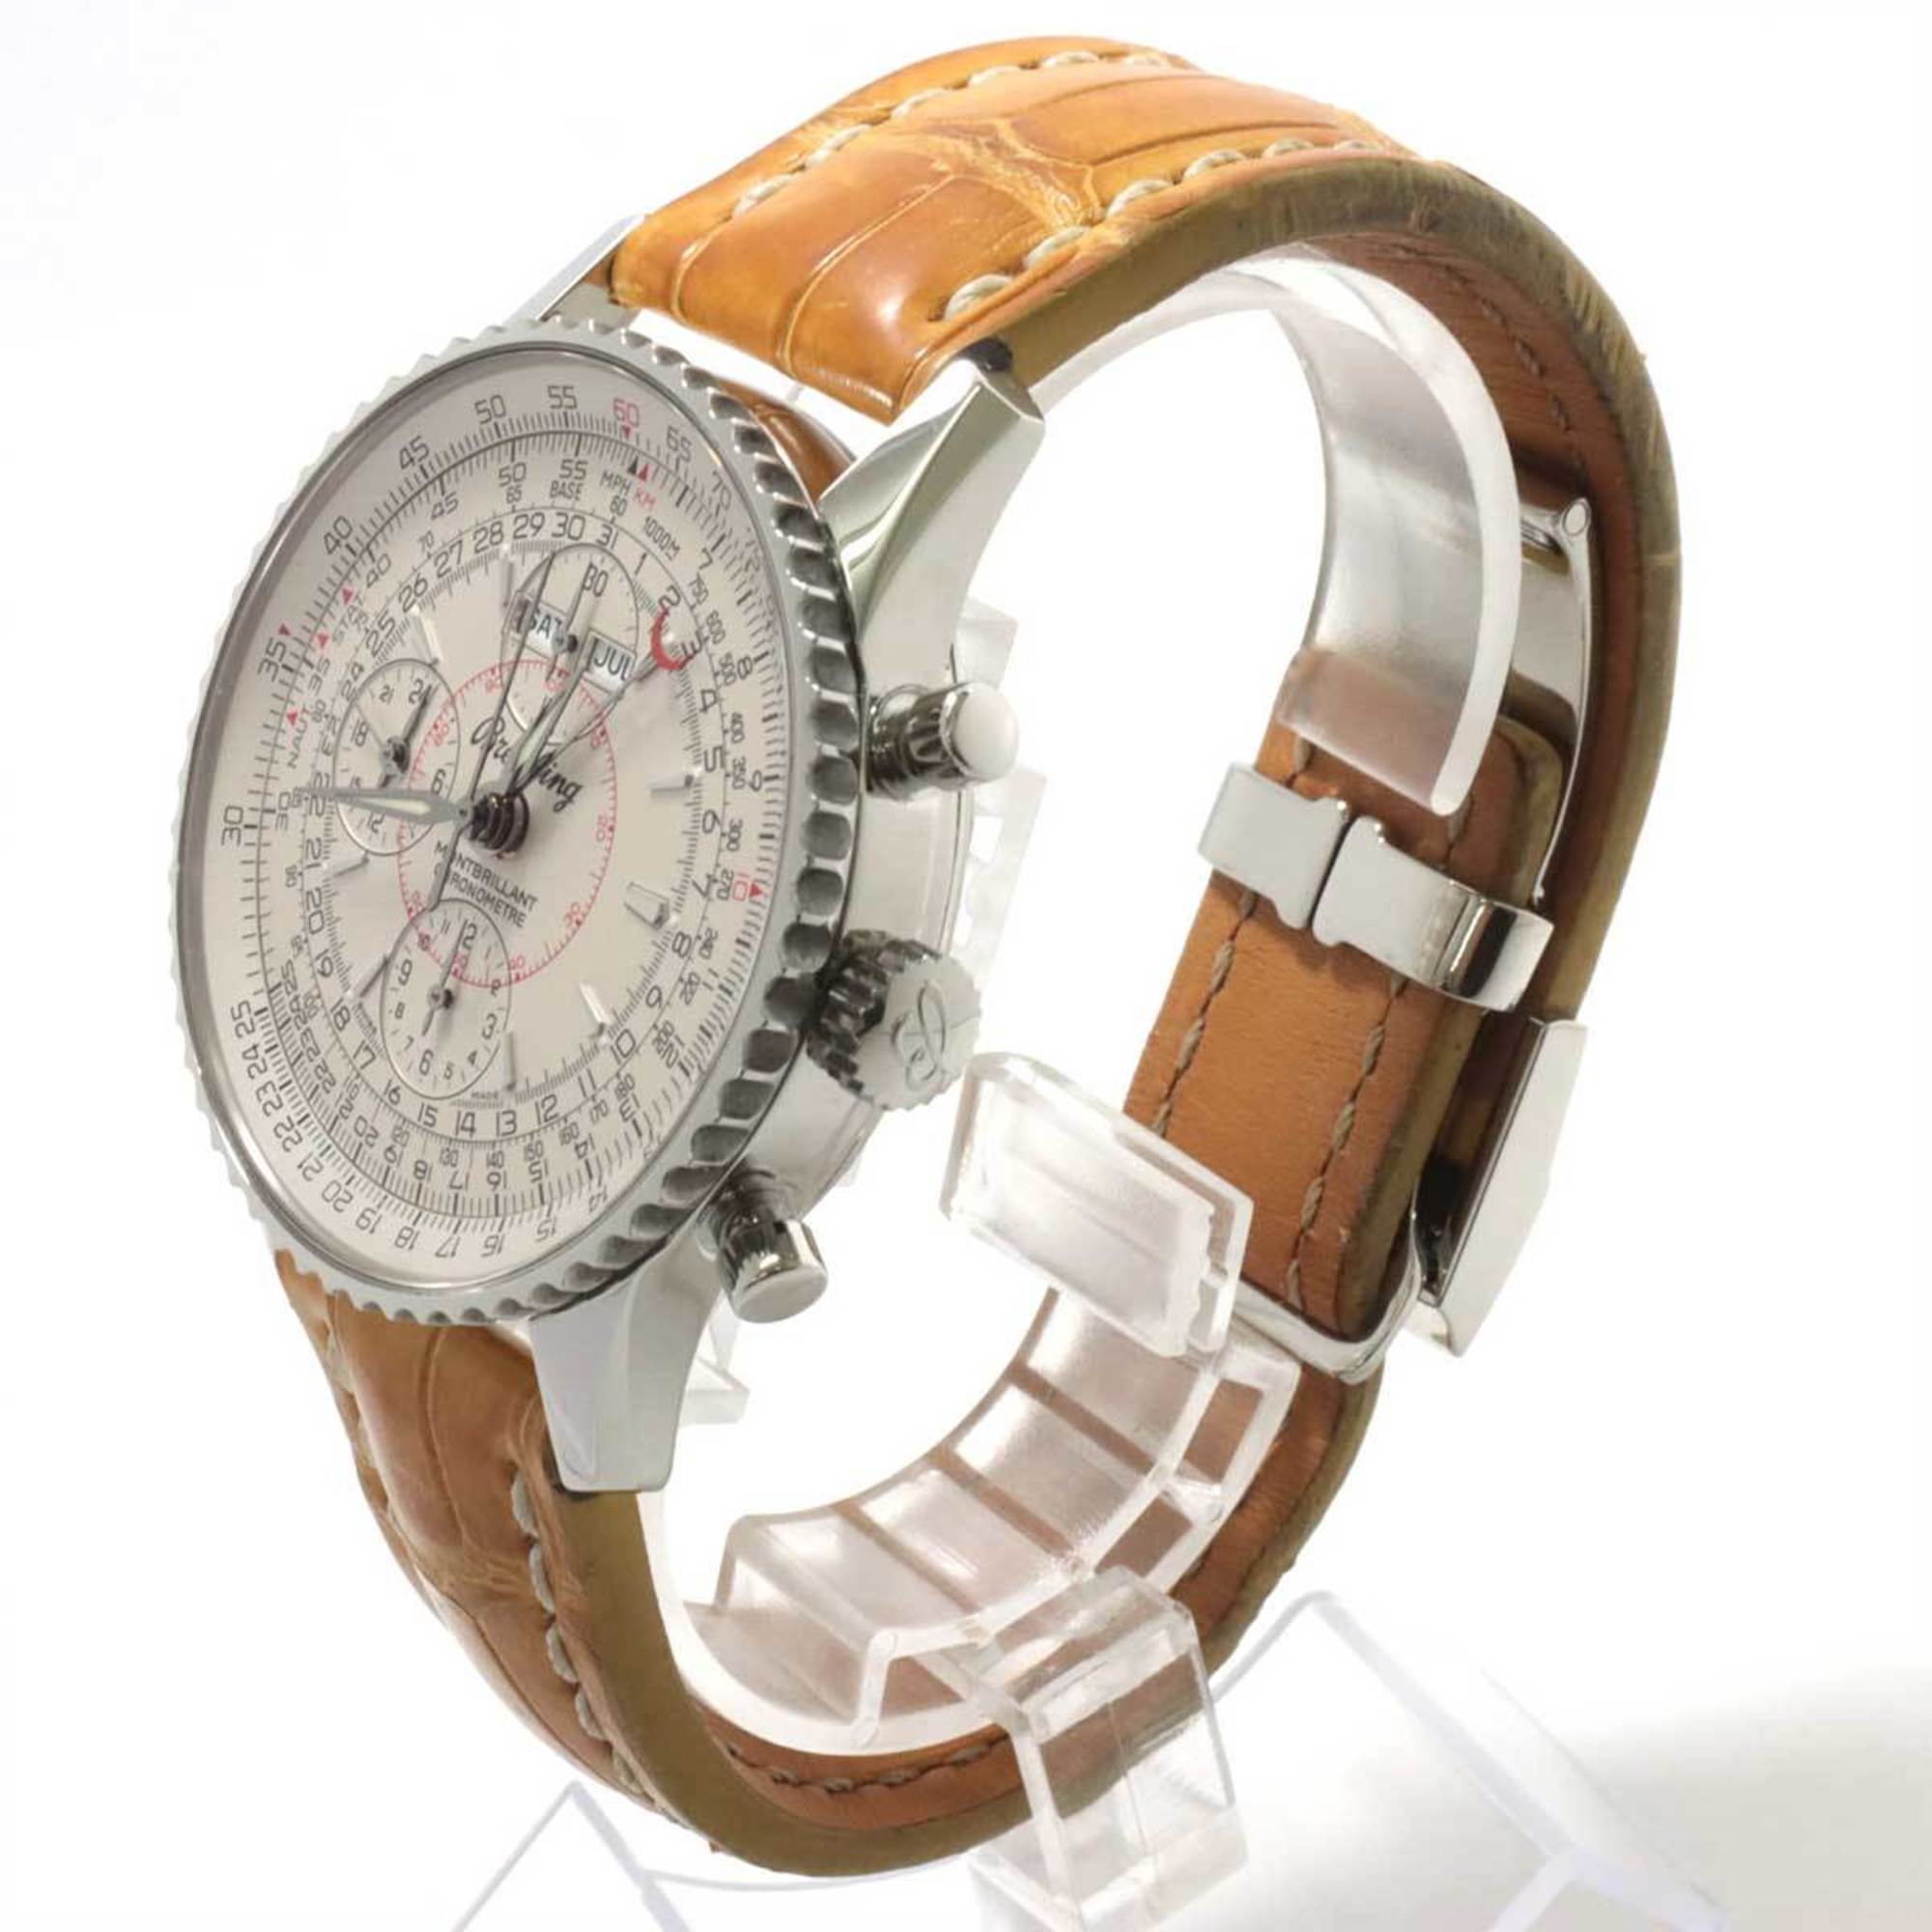 Breitling Navitimer Montbrilland Datra A21330 Chronograph Men's Watch Triple Calendar Silver Dial Automatic Winding